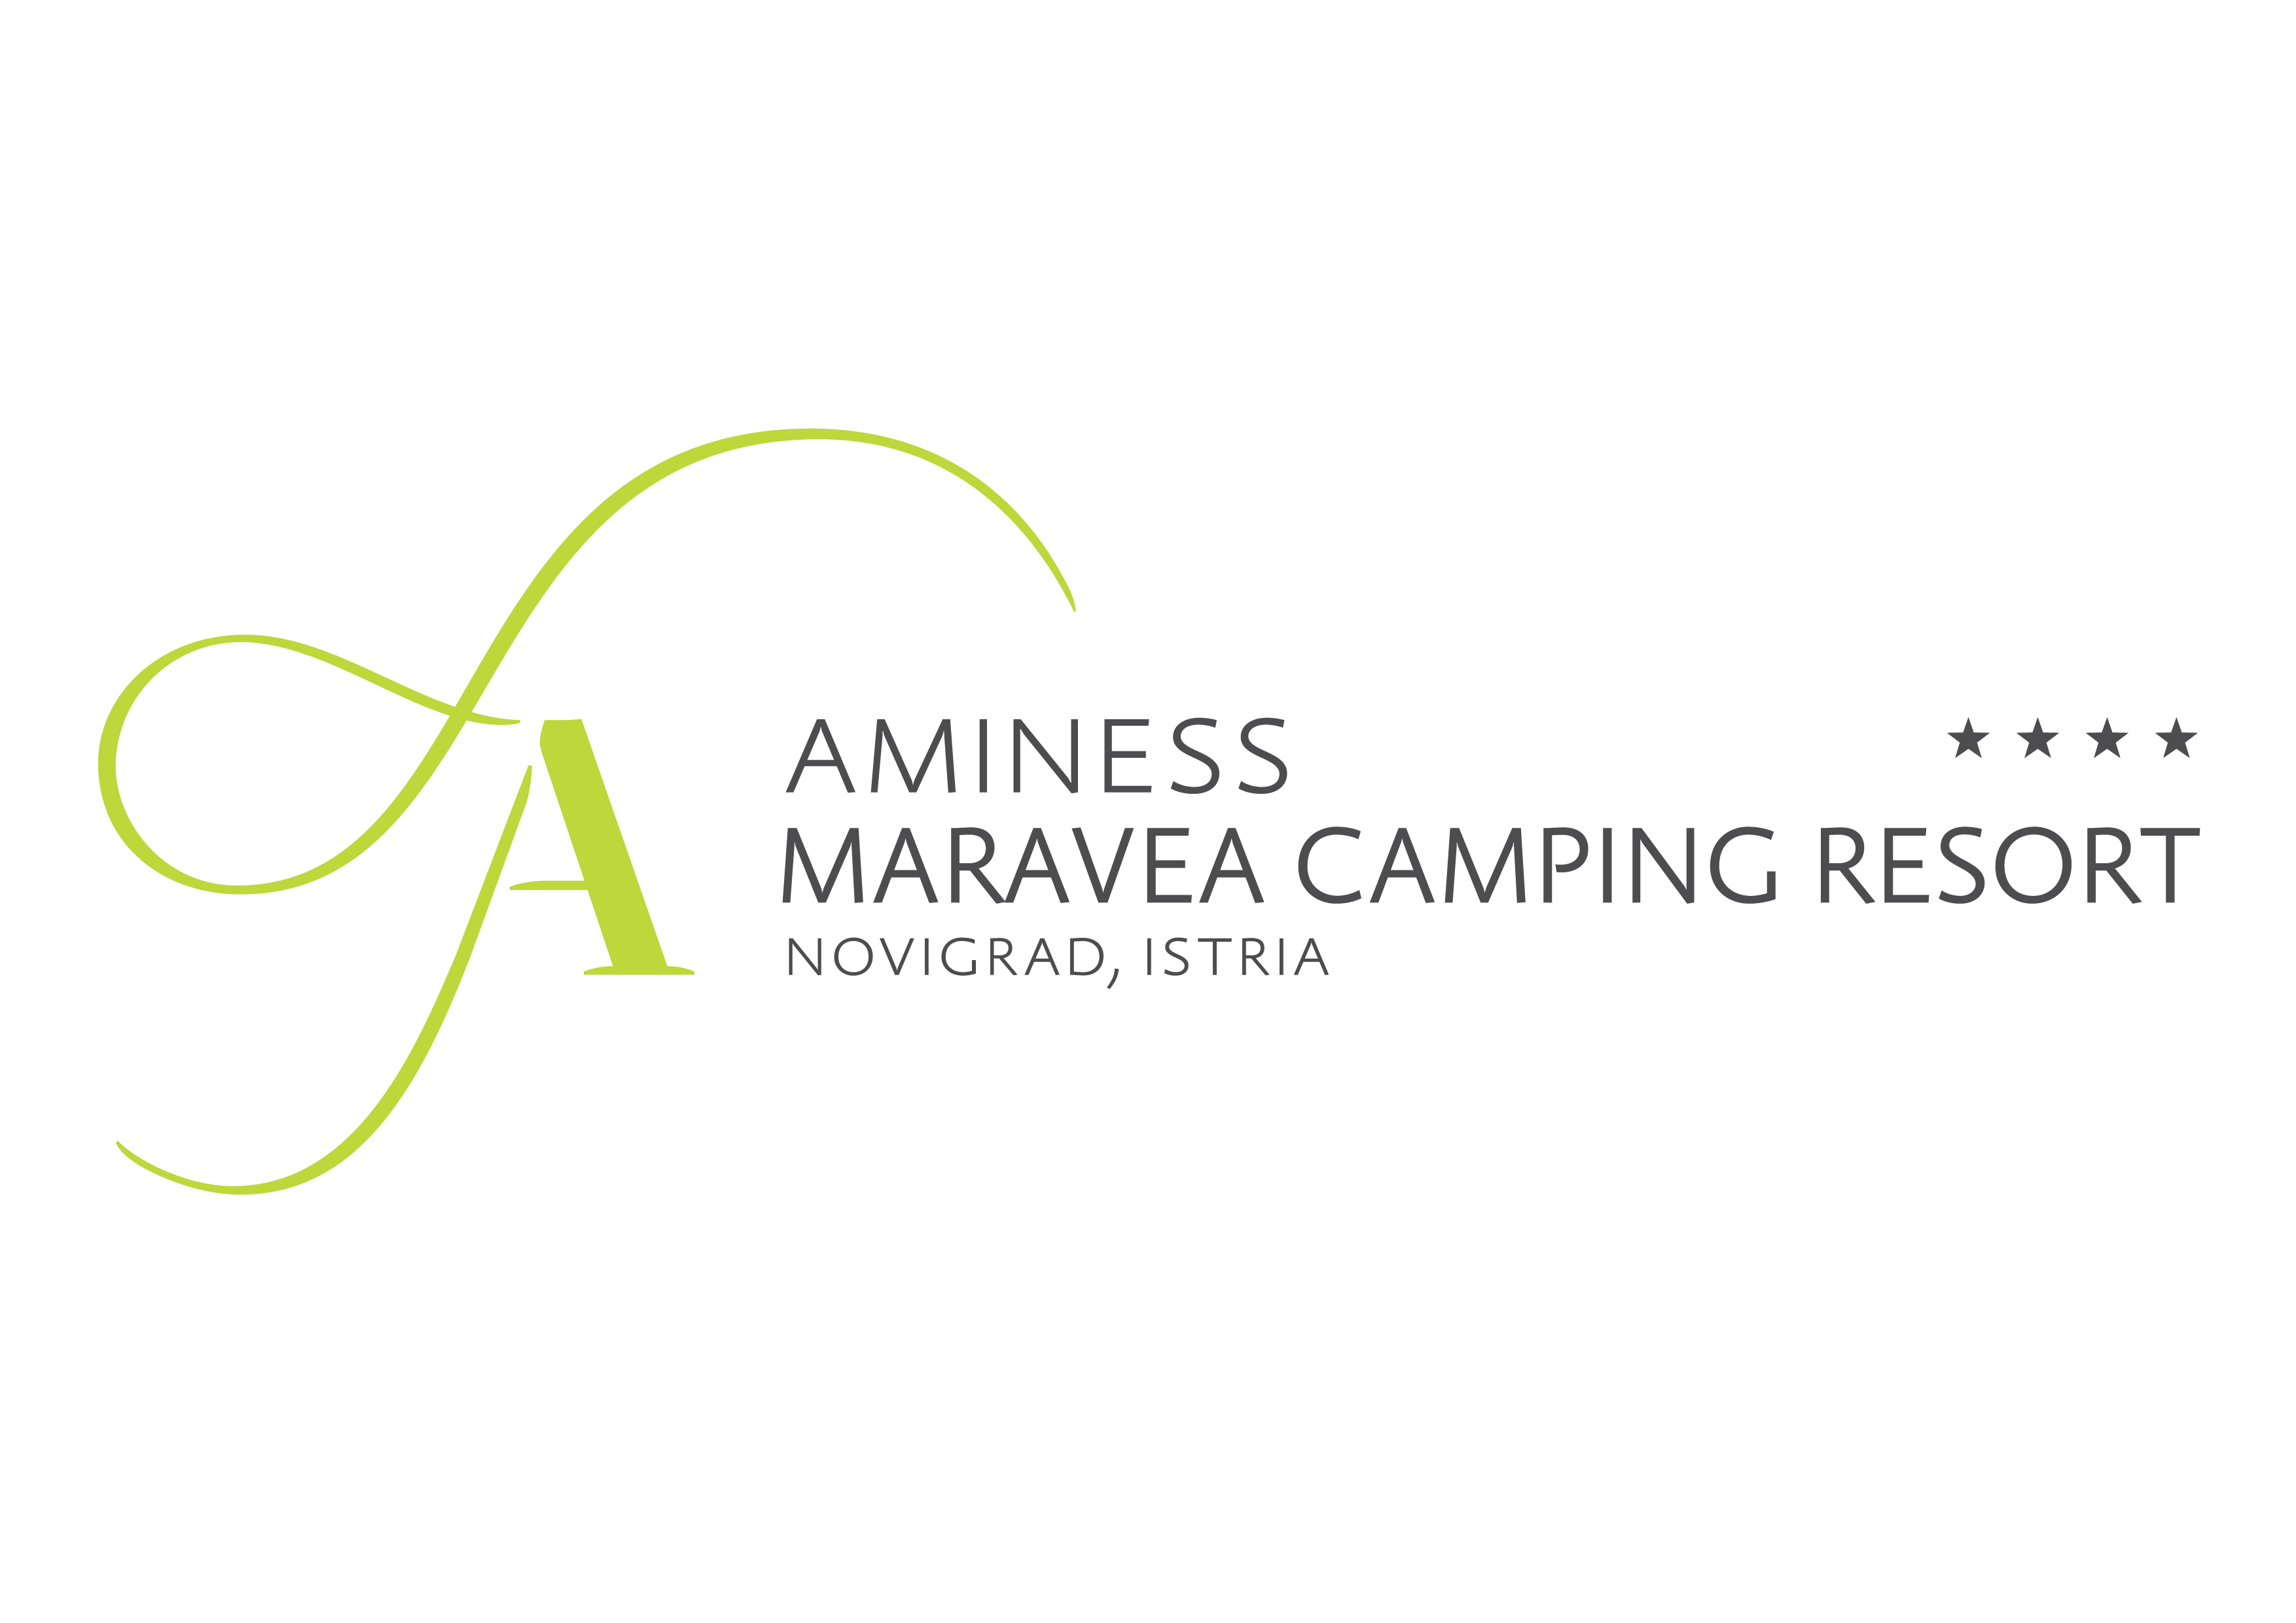 Aminess Maravea Camping Resort